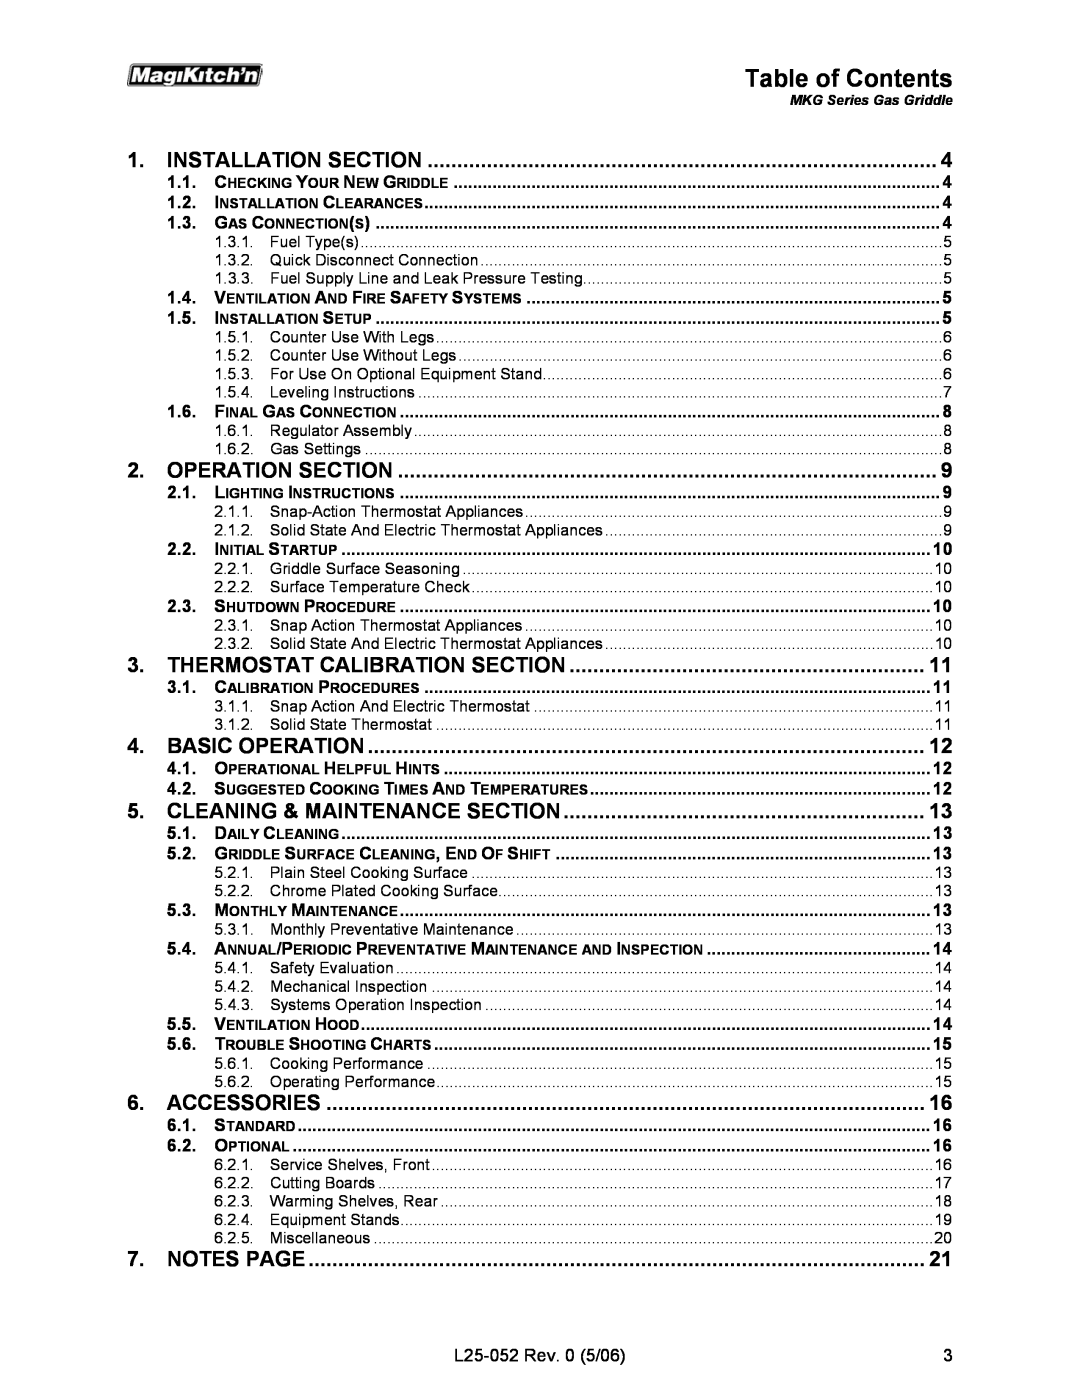 Magikitch'n MKG24, MKG72, MKG36, MKG60, MKG48 operation manual Table of Contents, L25-052Rev. 0 5/06 